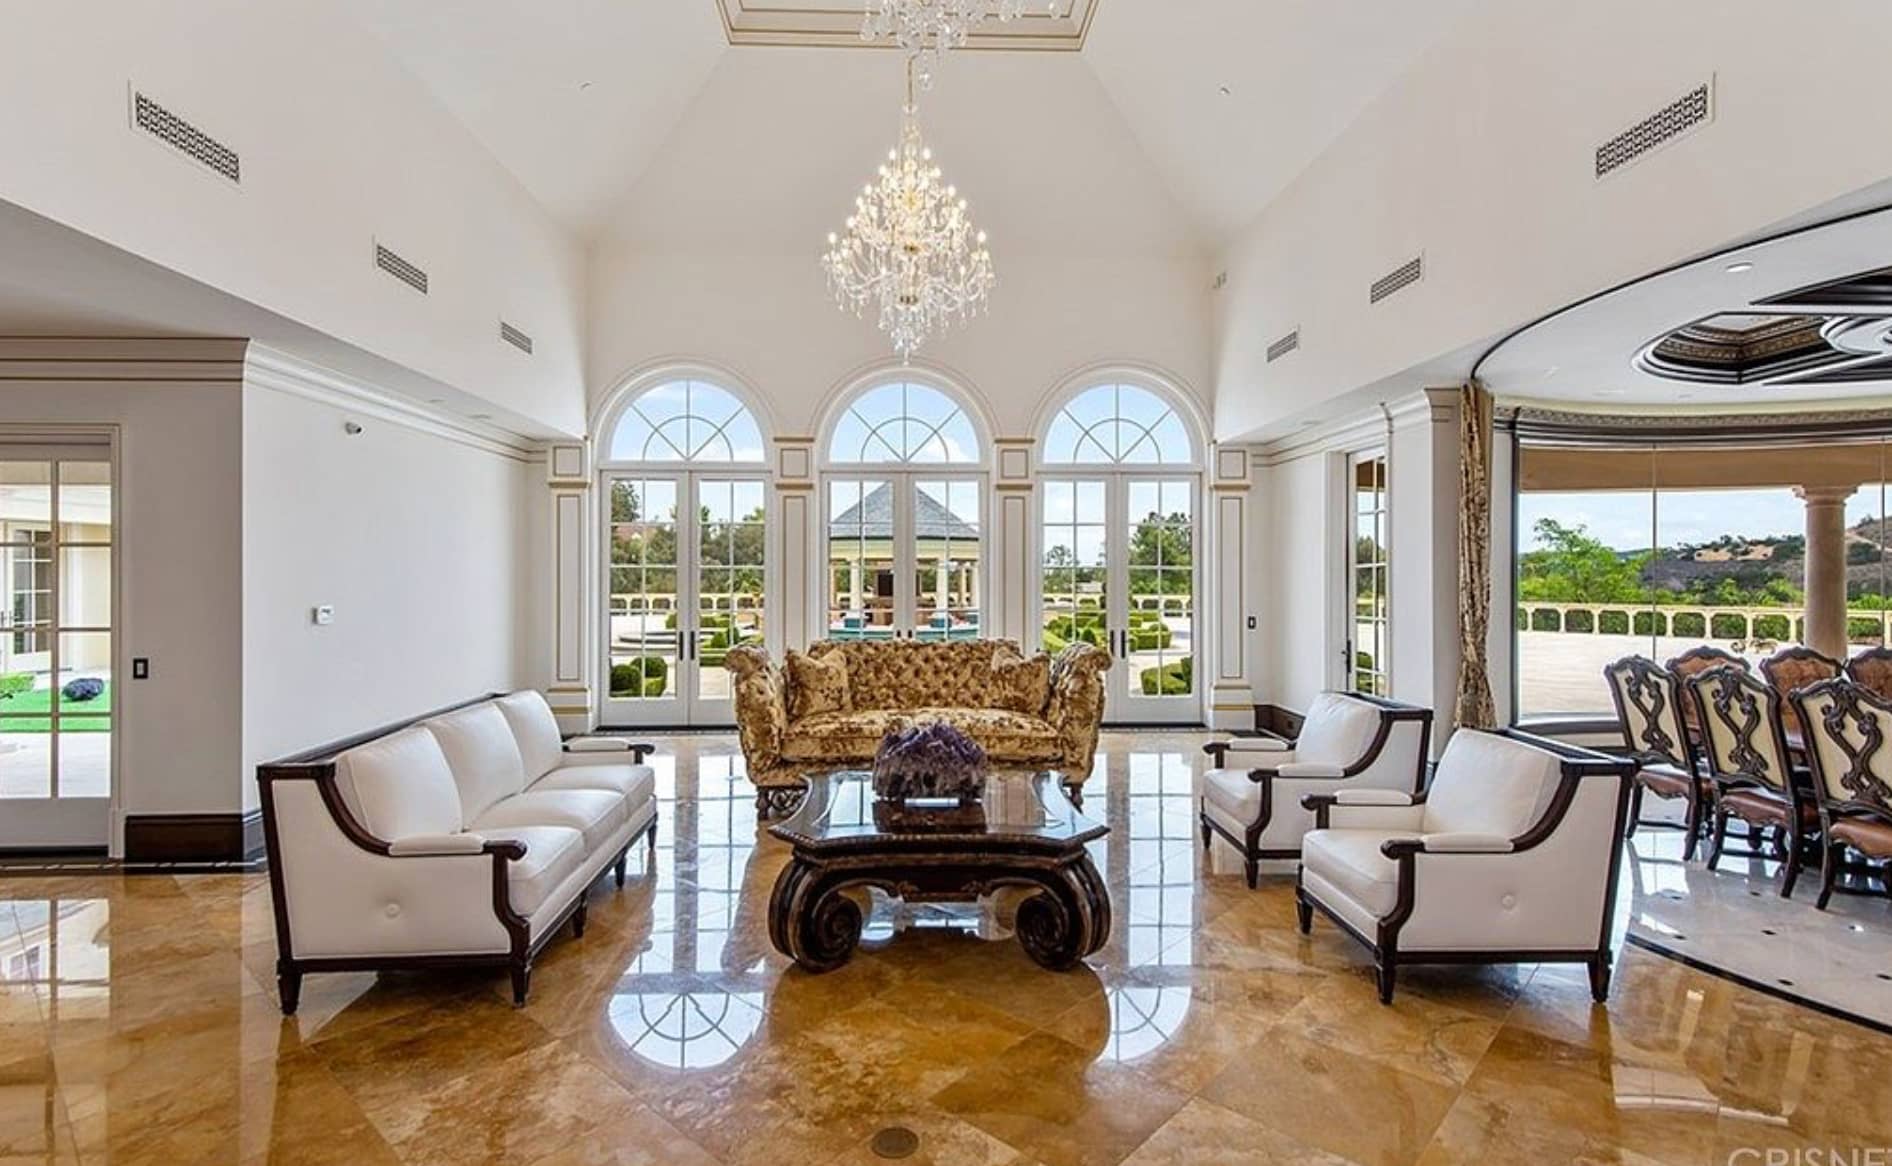 Get A Look Inside Jeffree Star's $14 Million Mansion